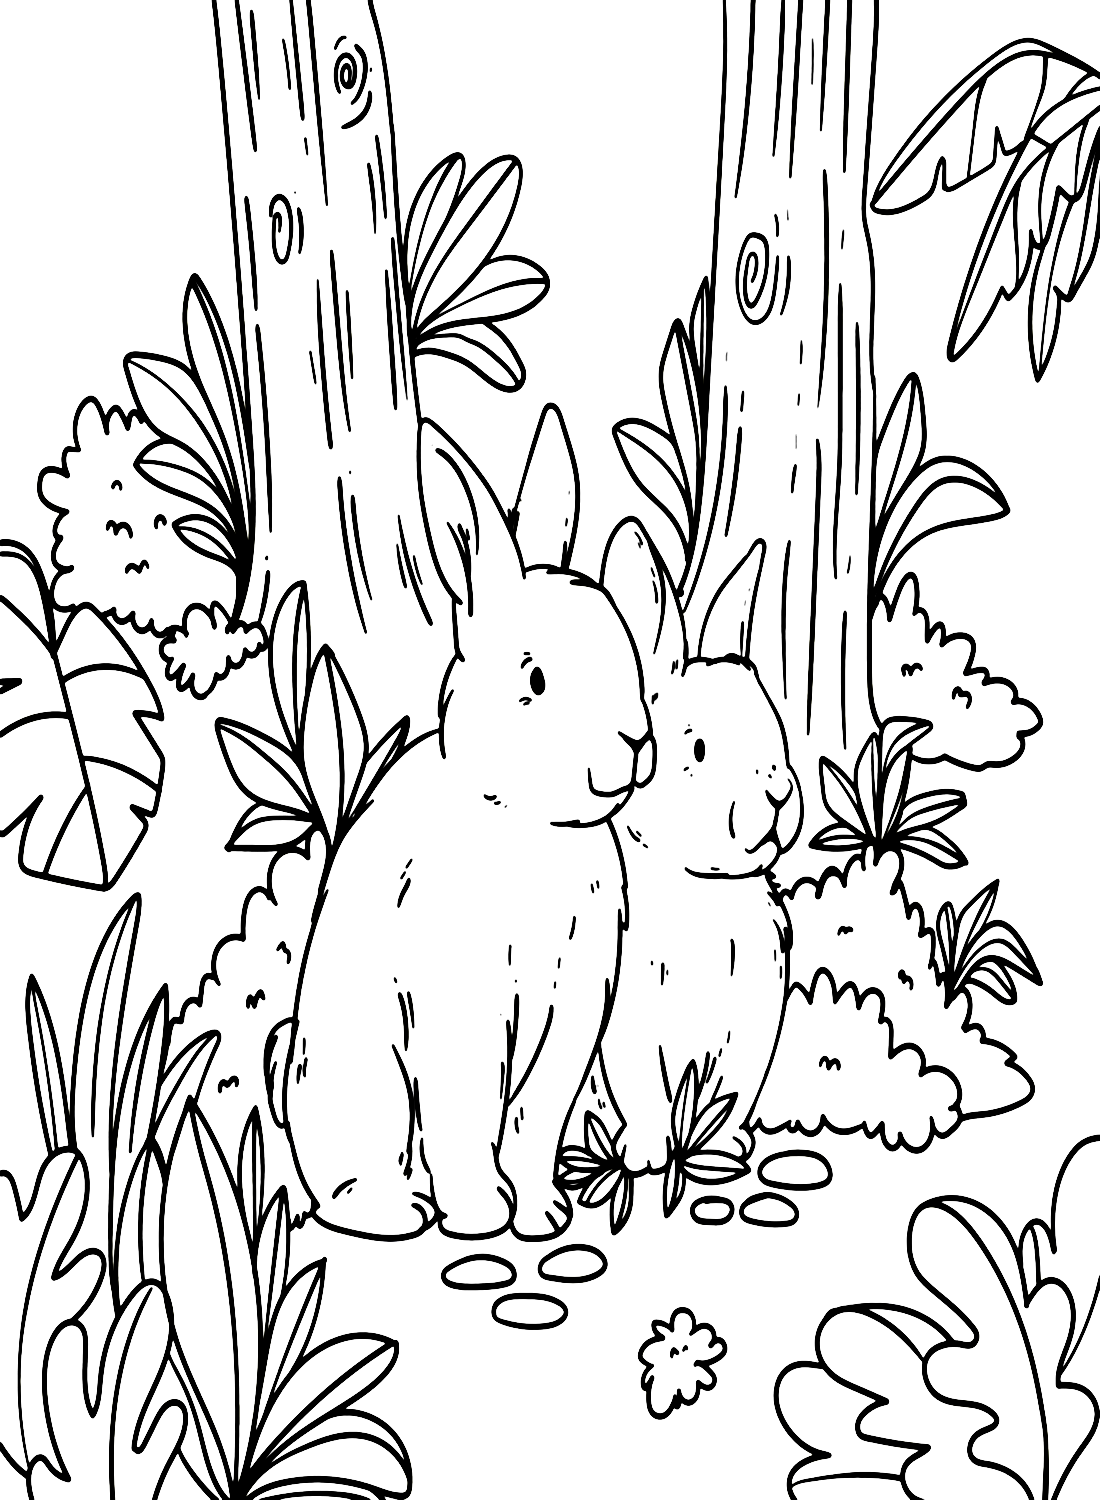 Rabbits from Rabbit